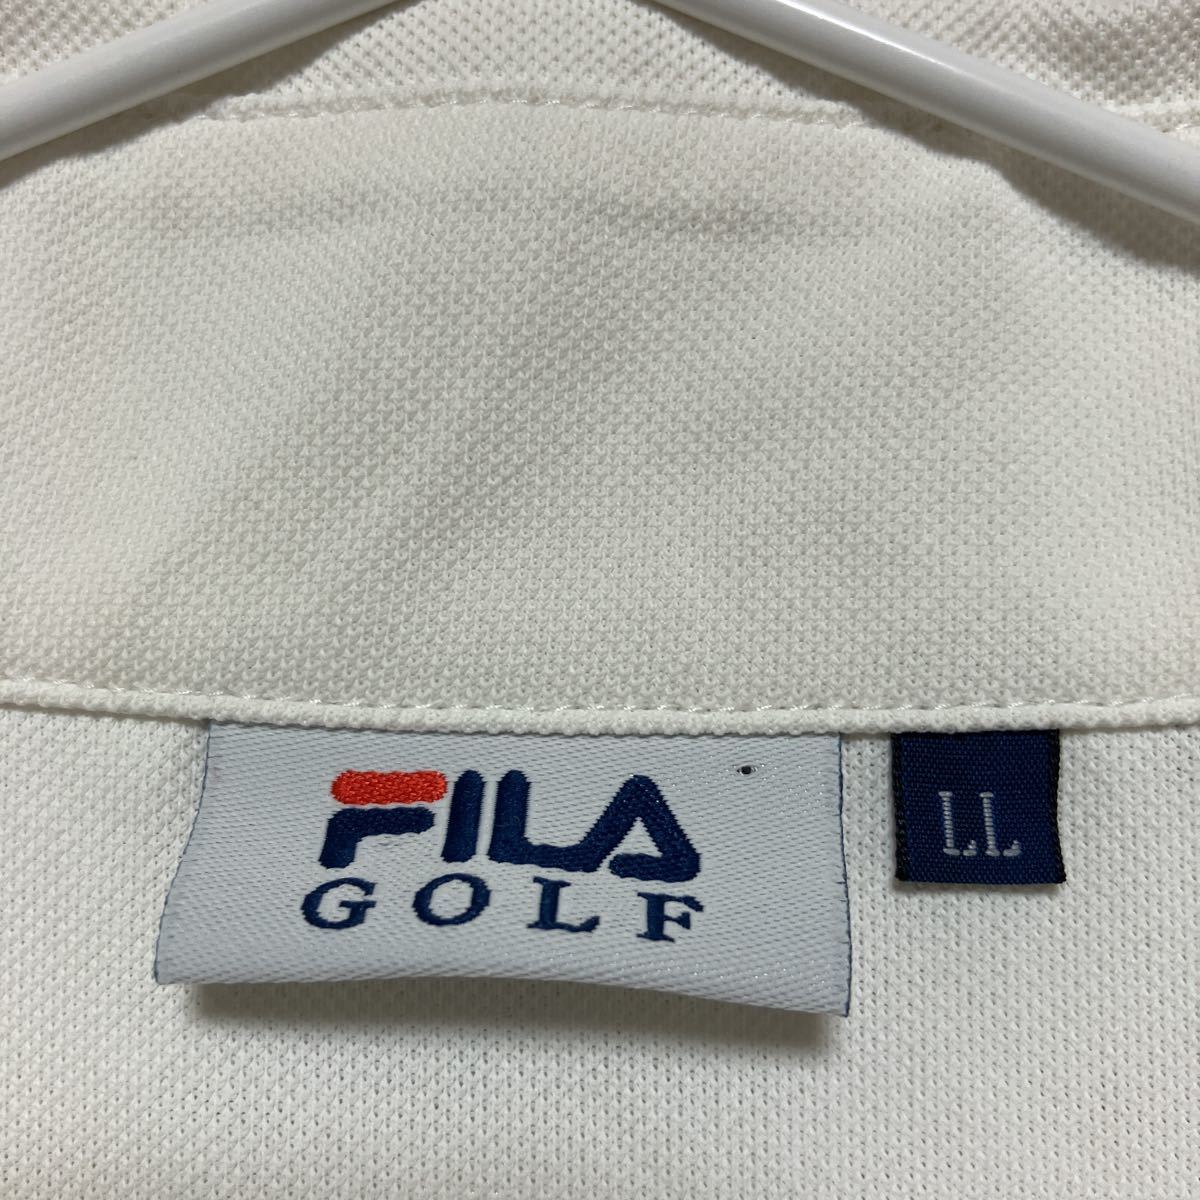 【FILA GOLF】 フィラゴルフ メンズ 半袖ポロシャツ LLサイズ ホワイト系 未使用 送料無料_画像4